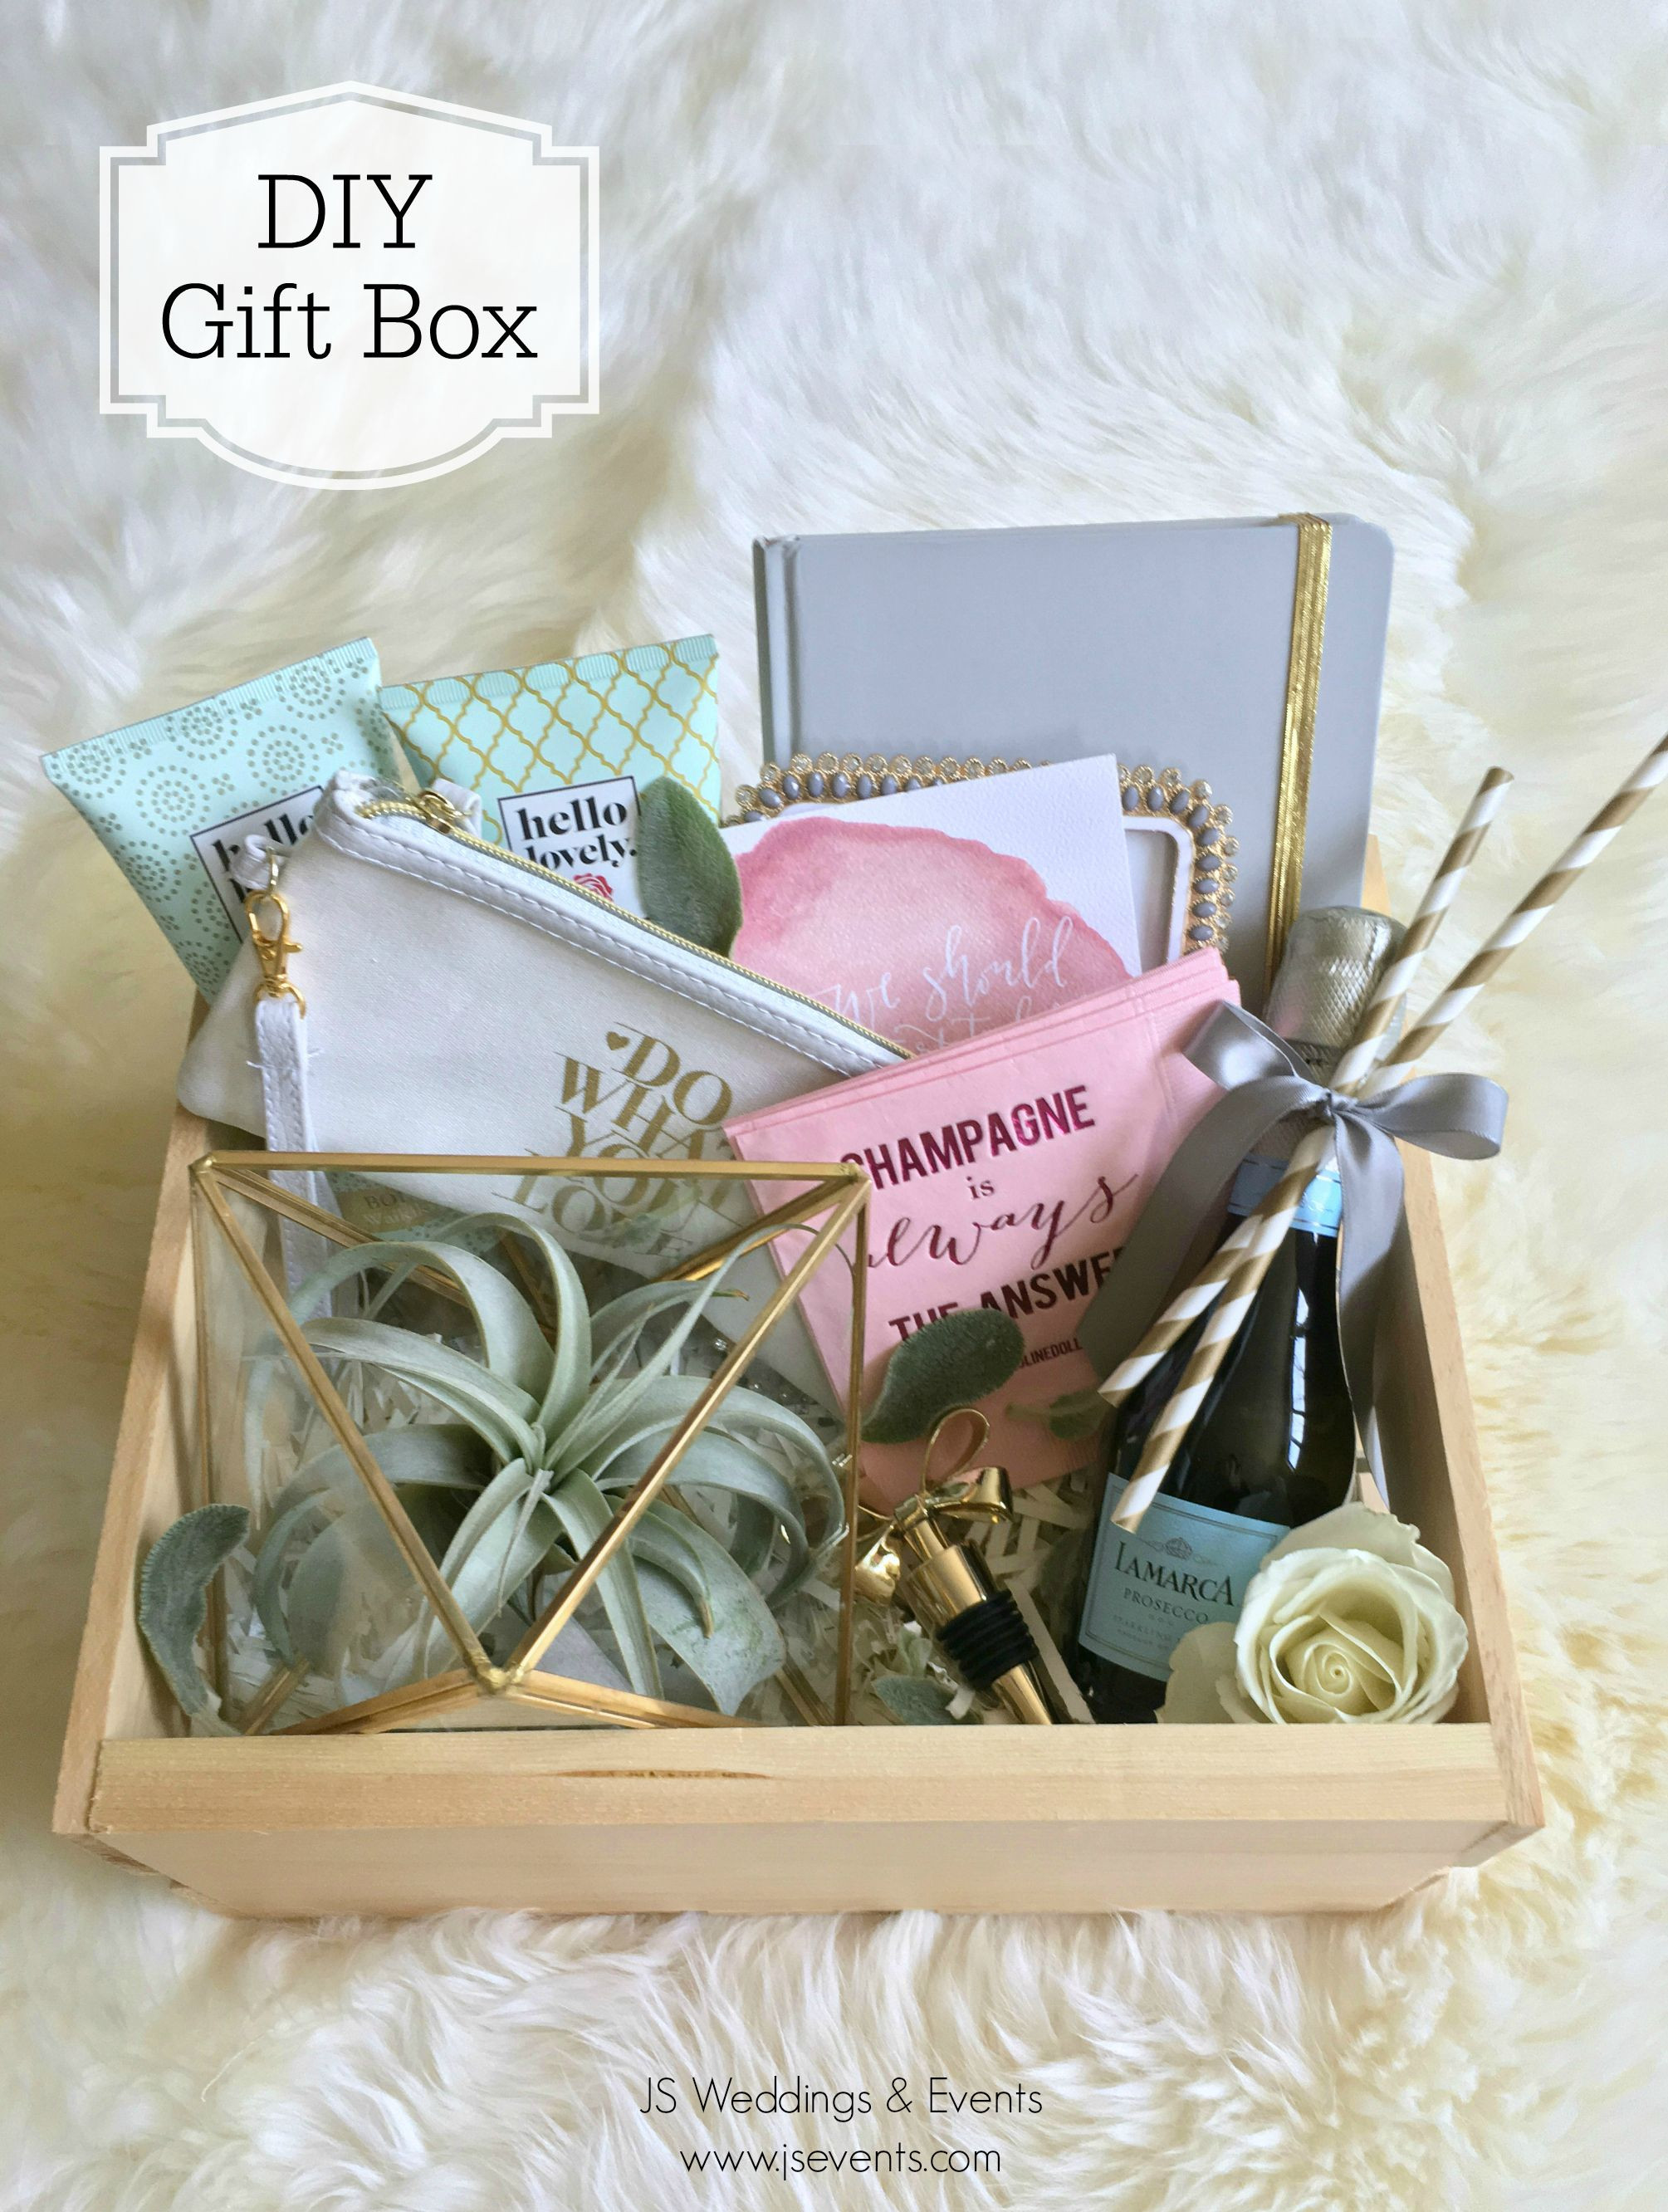 Best ideas about DIY Wedding Gift Ideas
. Save or Pin DIY Gift Box j u b i l e e  Now.